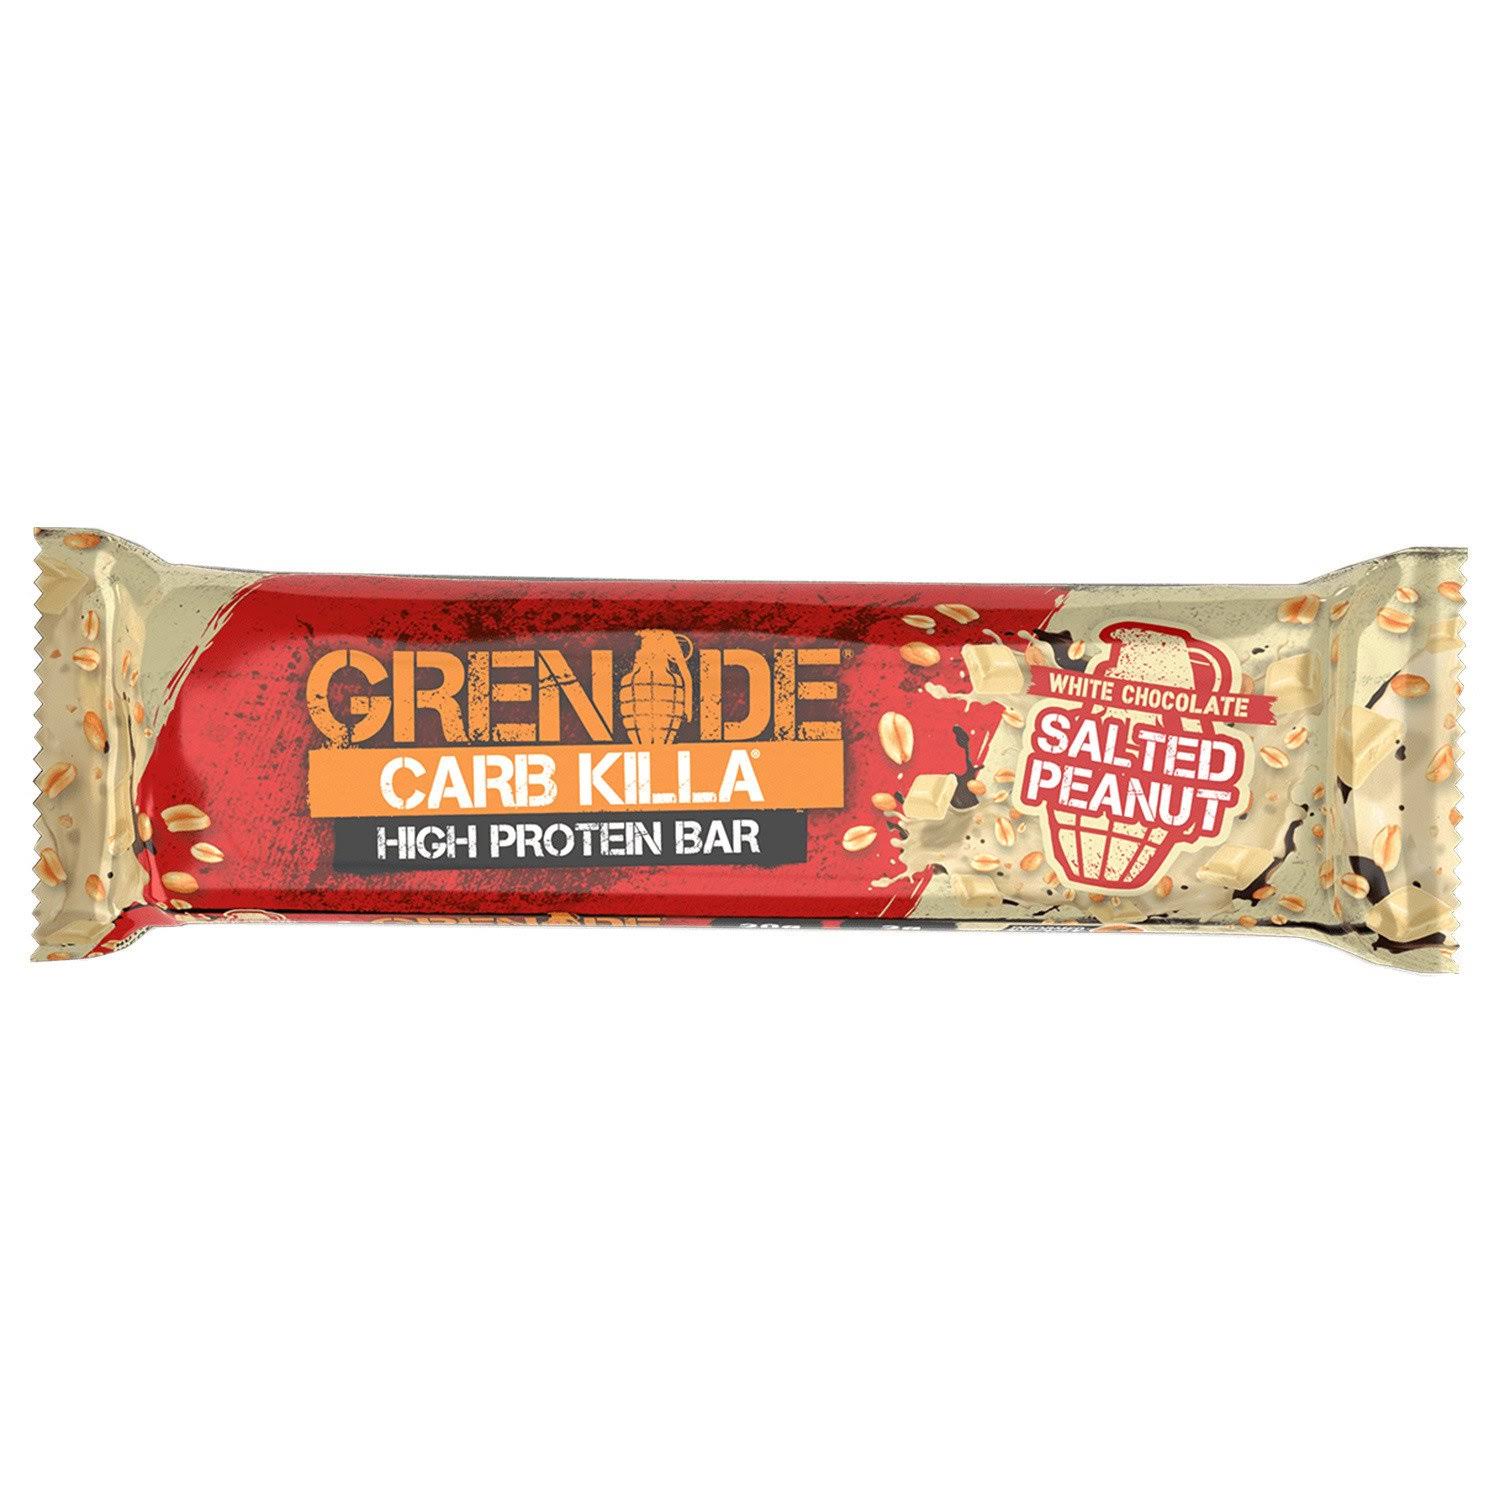 Grenade Carb Killa High Protein Bar - White Chocolate Salted Peanut, 30g